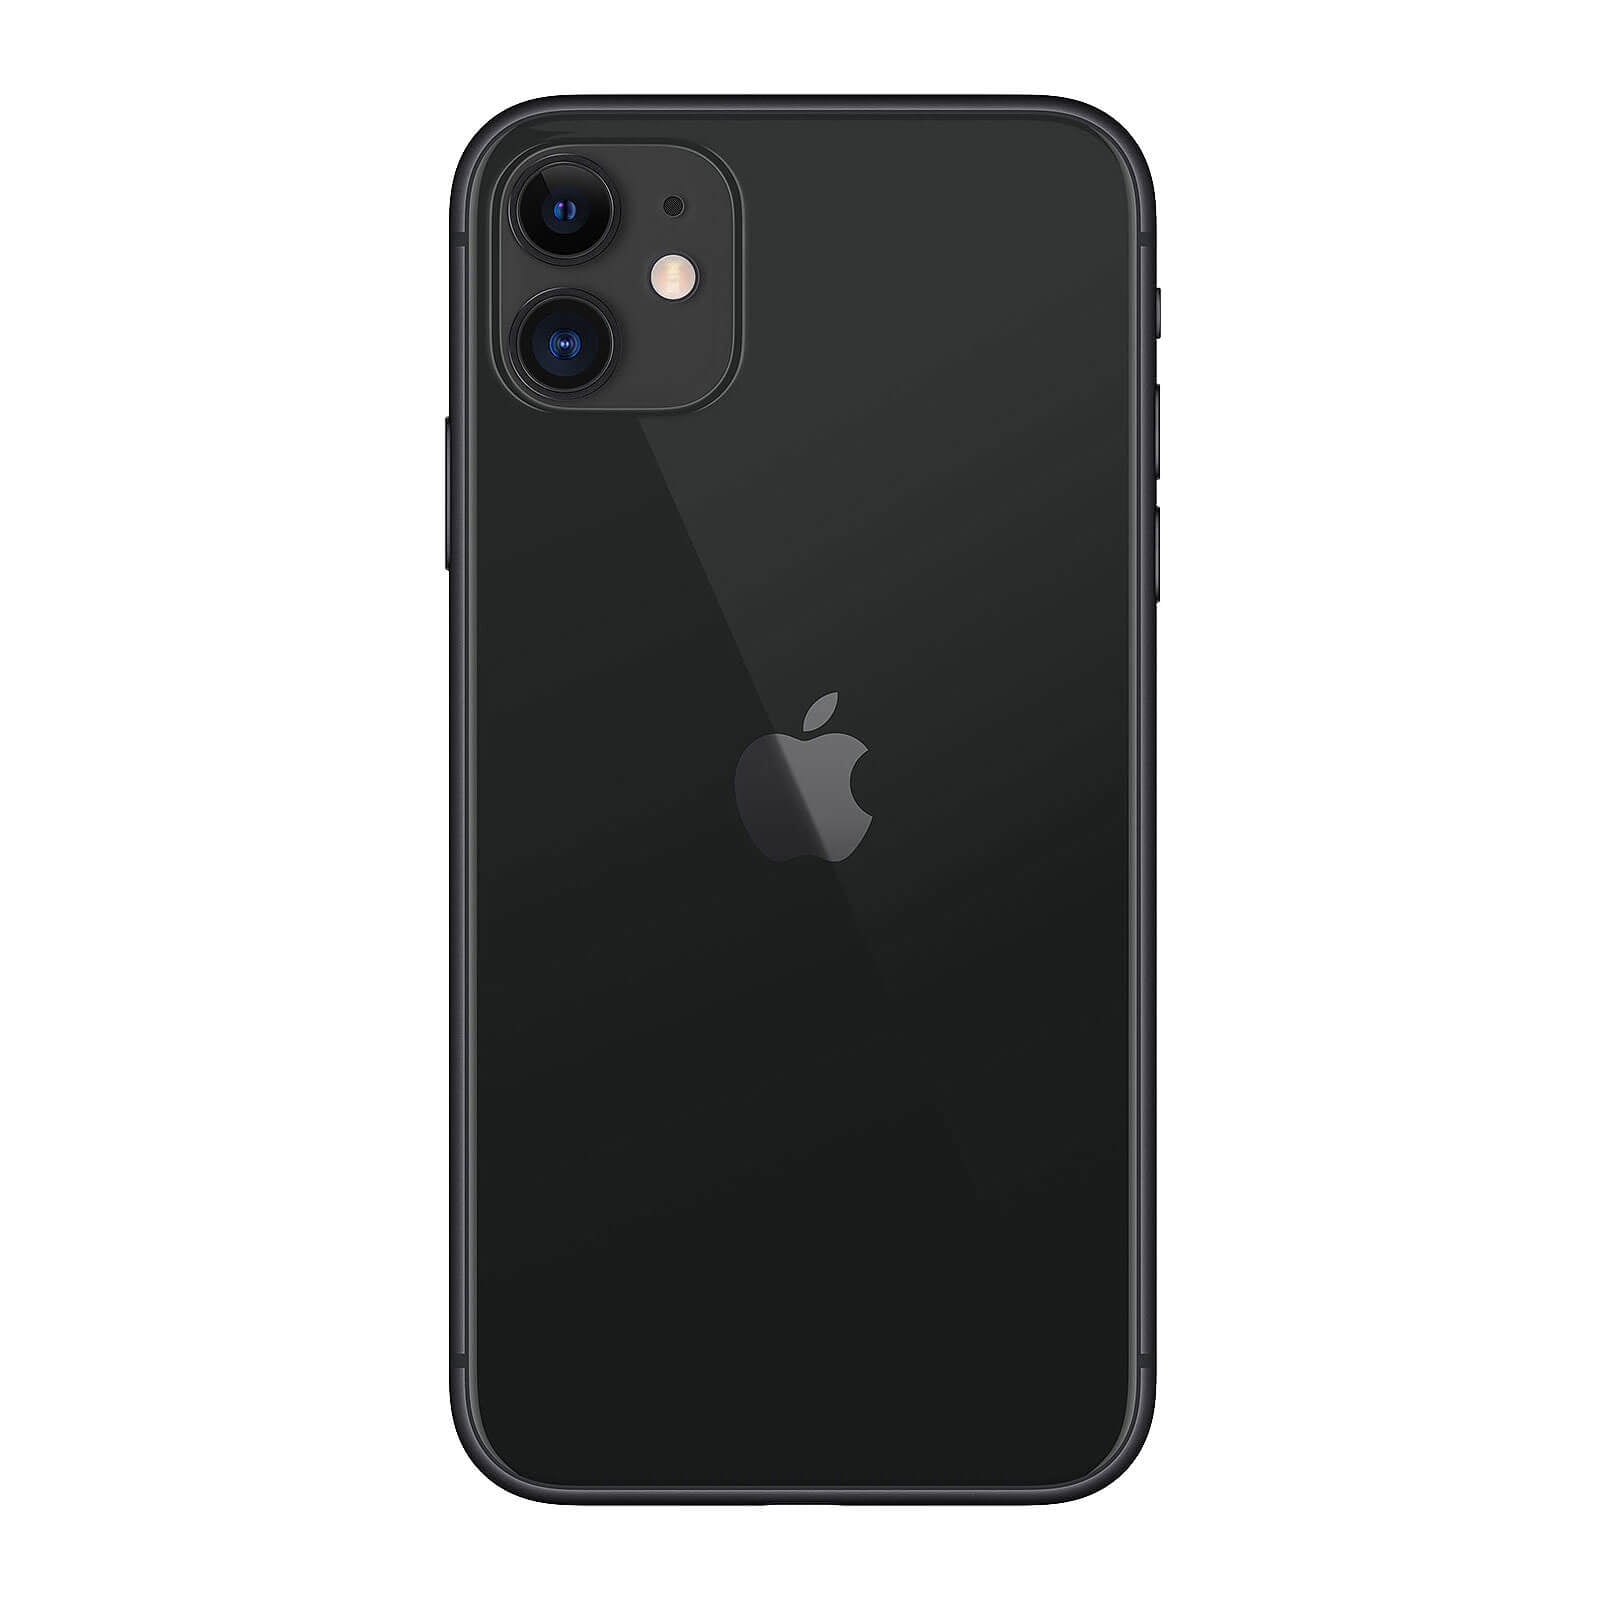 Apple iPhone 11 64GB Black Pristine - AT&T